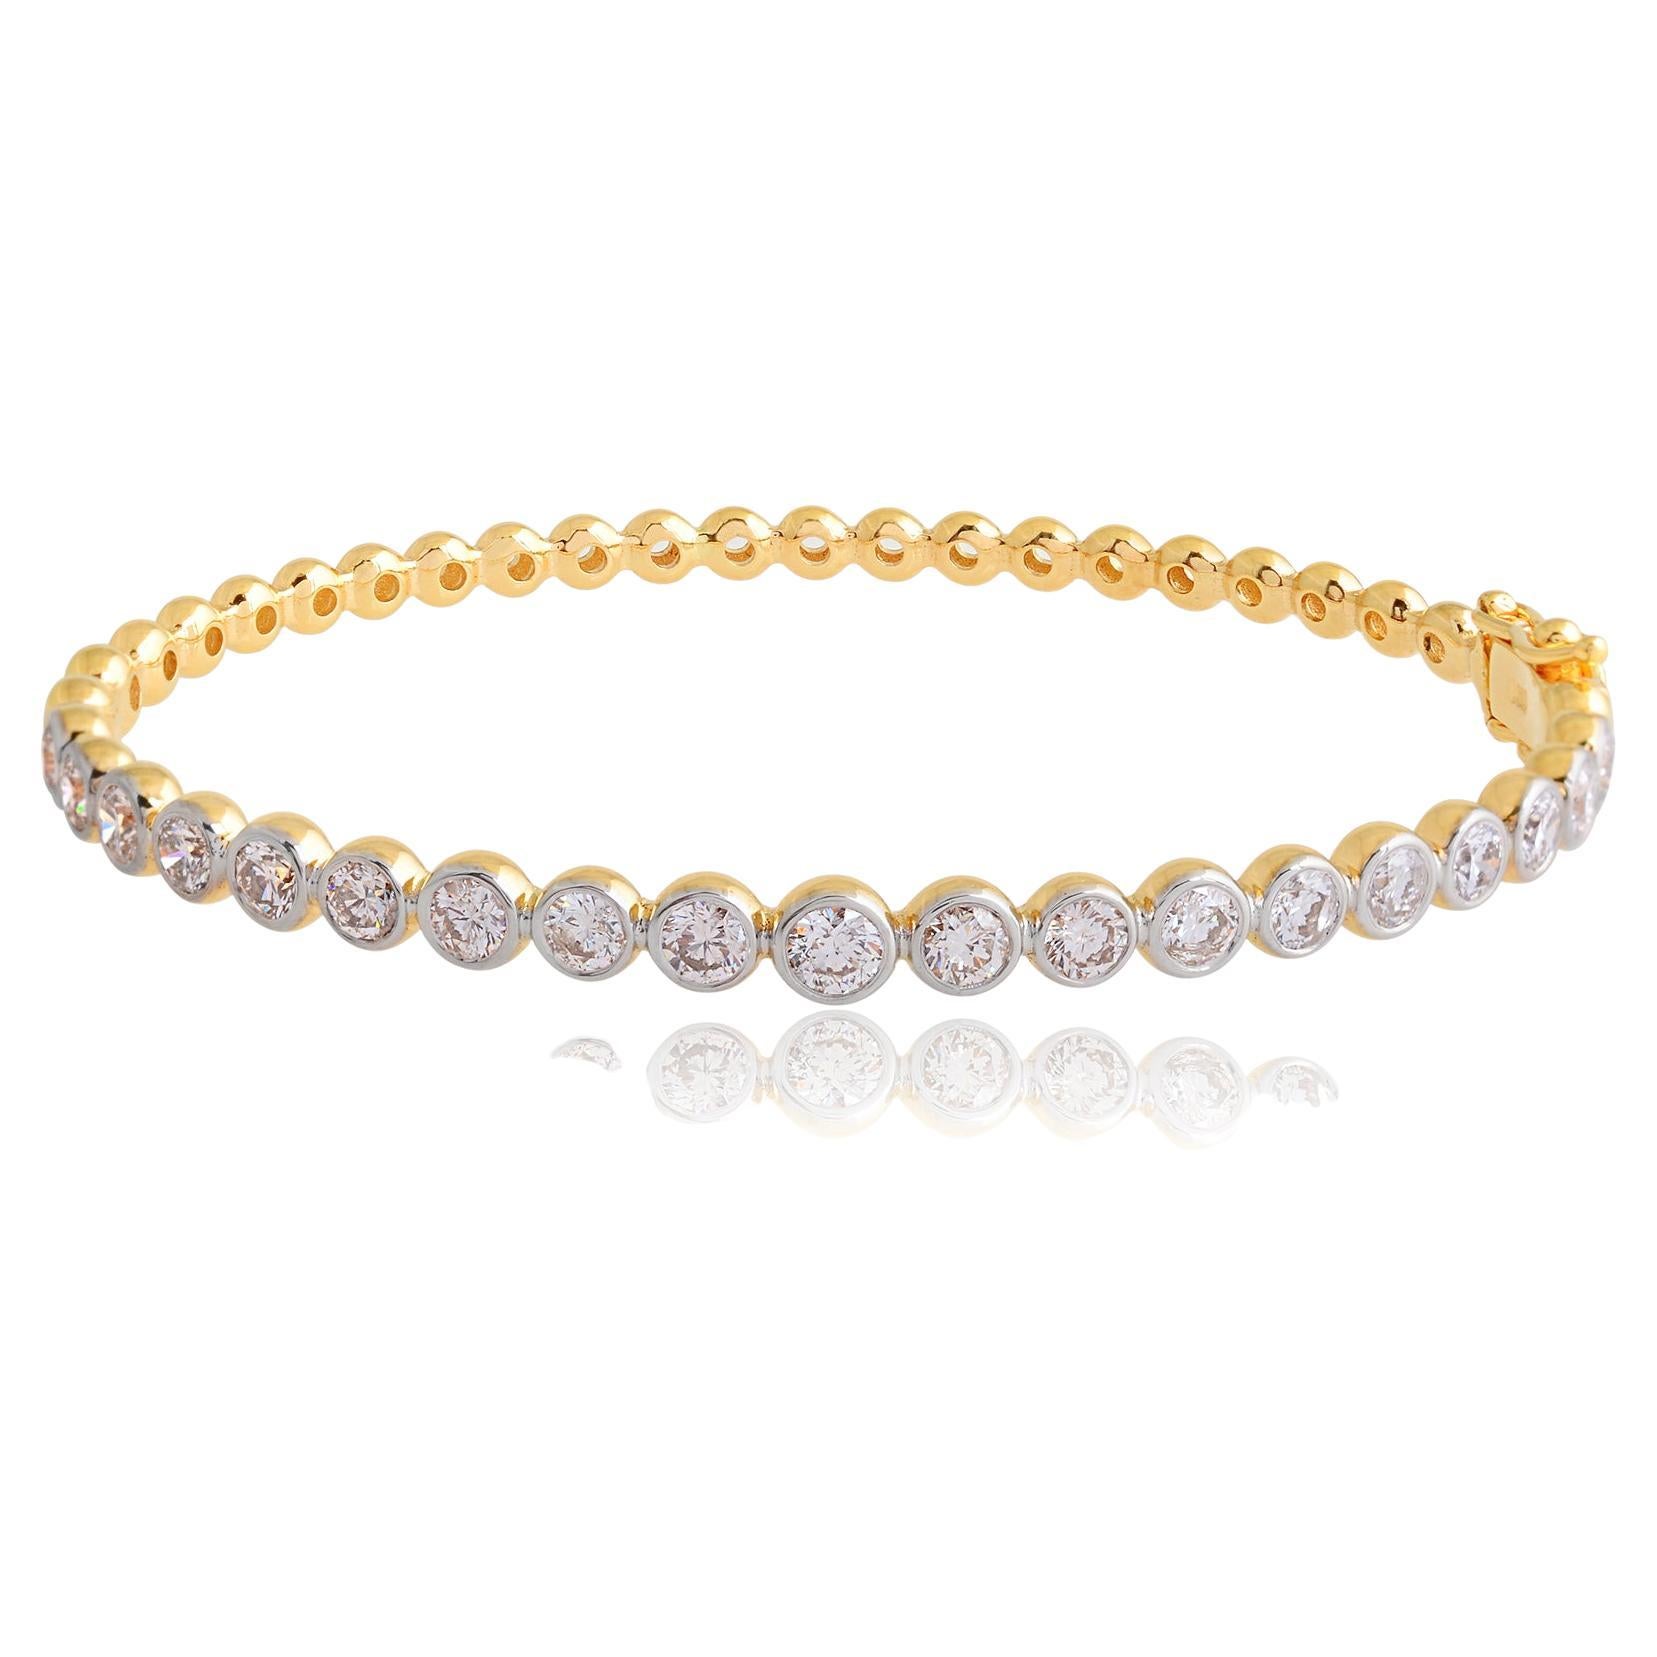 2.70 Carat Single Line Natural Diamond Bracelet Solid 18k Yellow Gold Jewelry